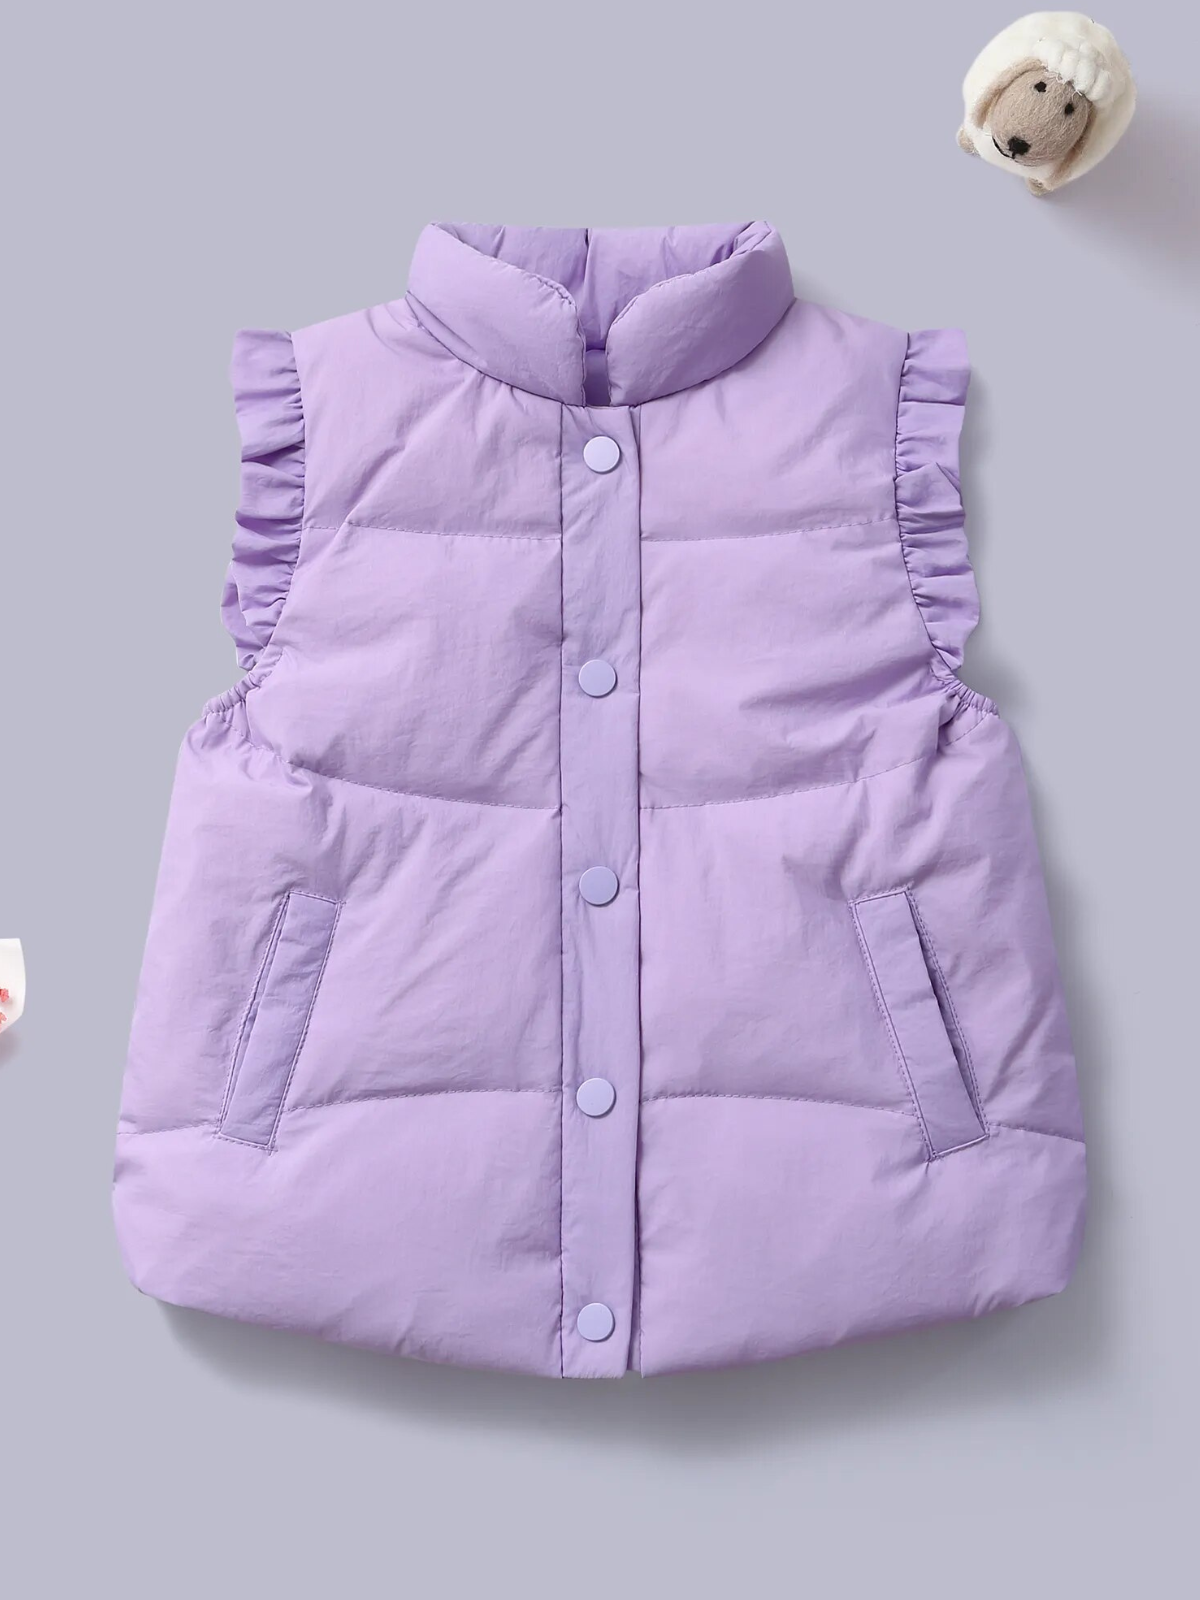 Mia Belle Girls Ruffle Sleeve Puffer Vest | Girls Winter Tops